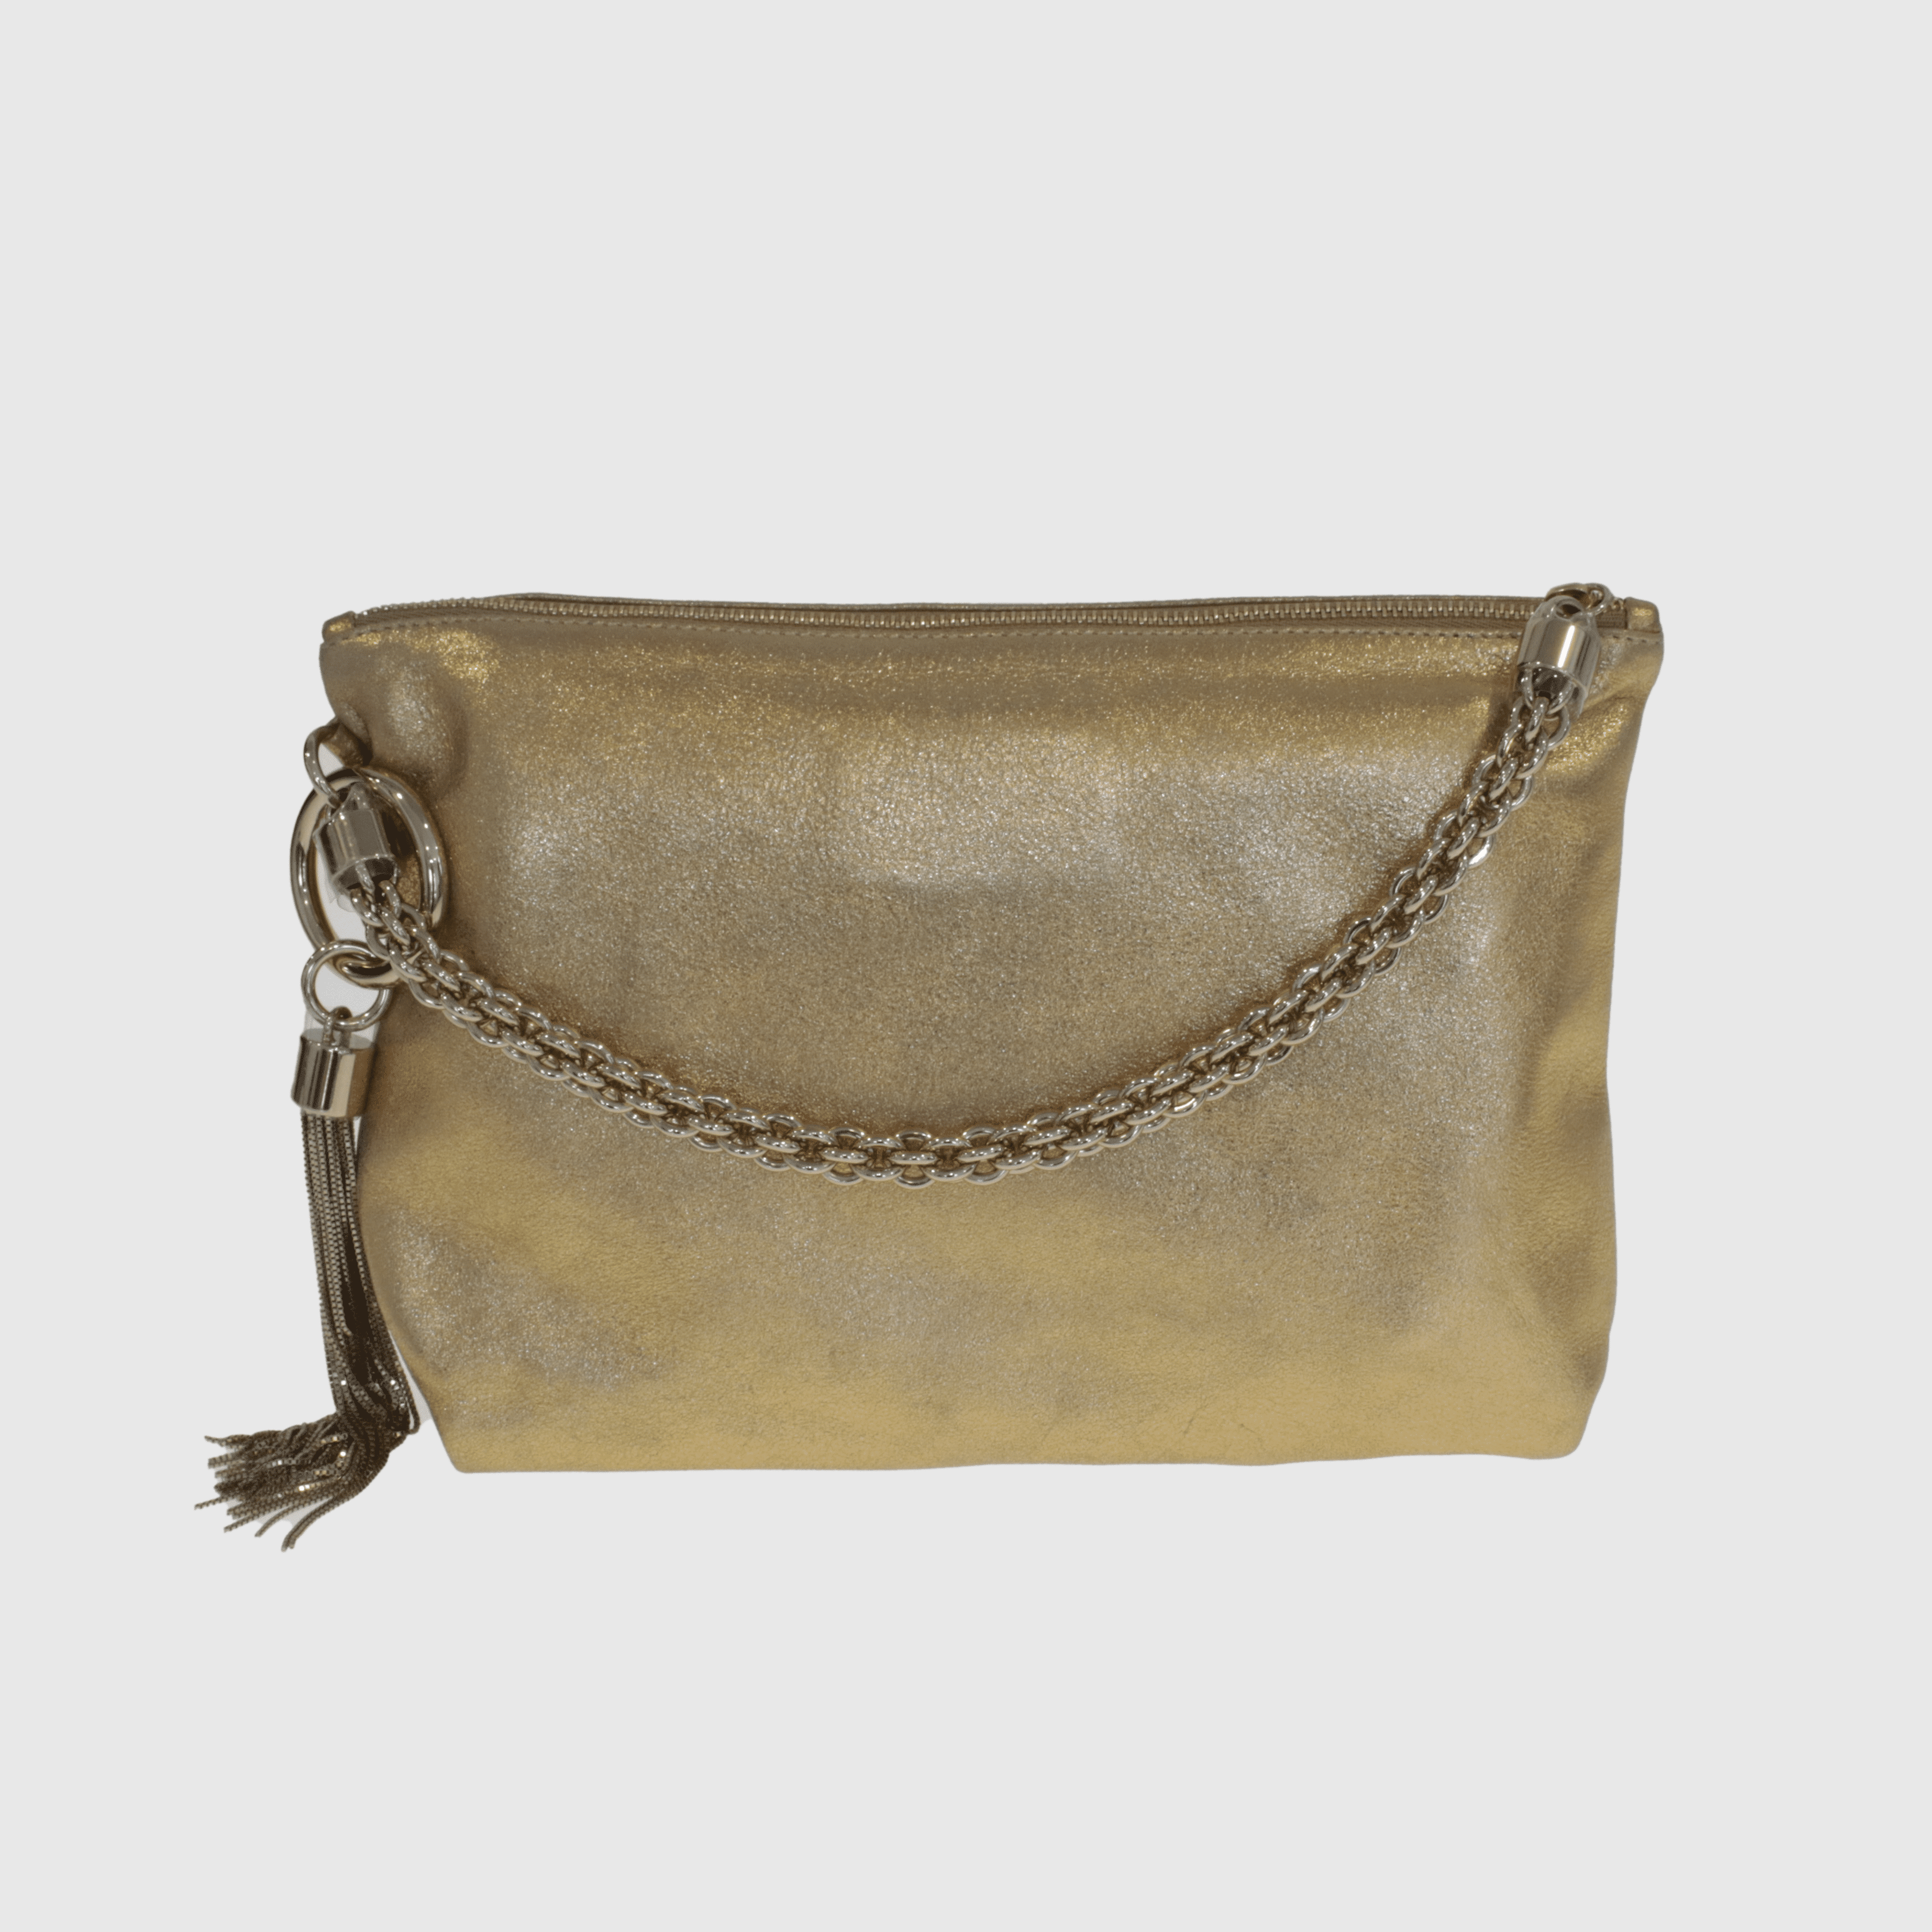 Metallic Gold Callie Bag